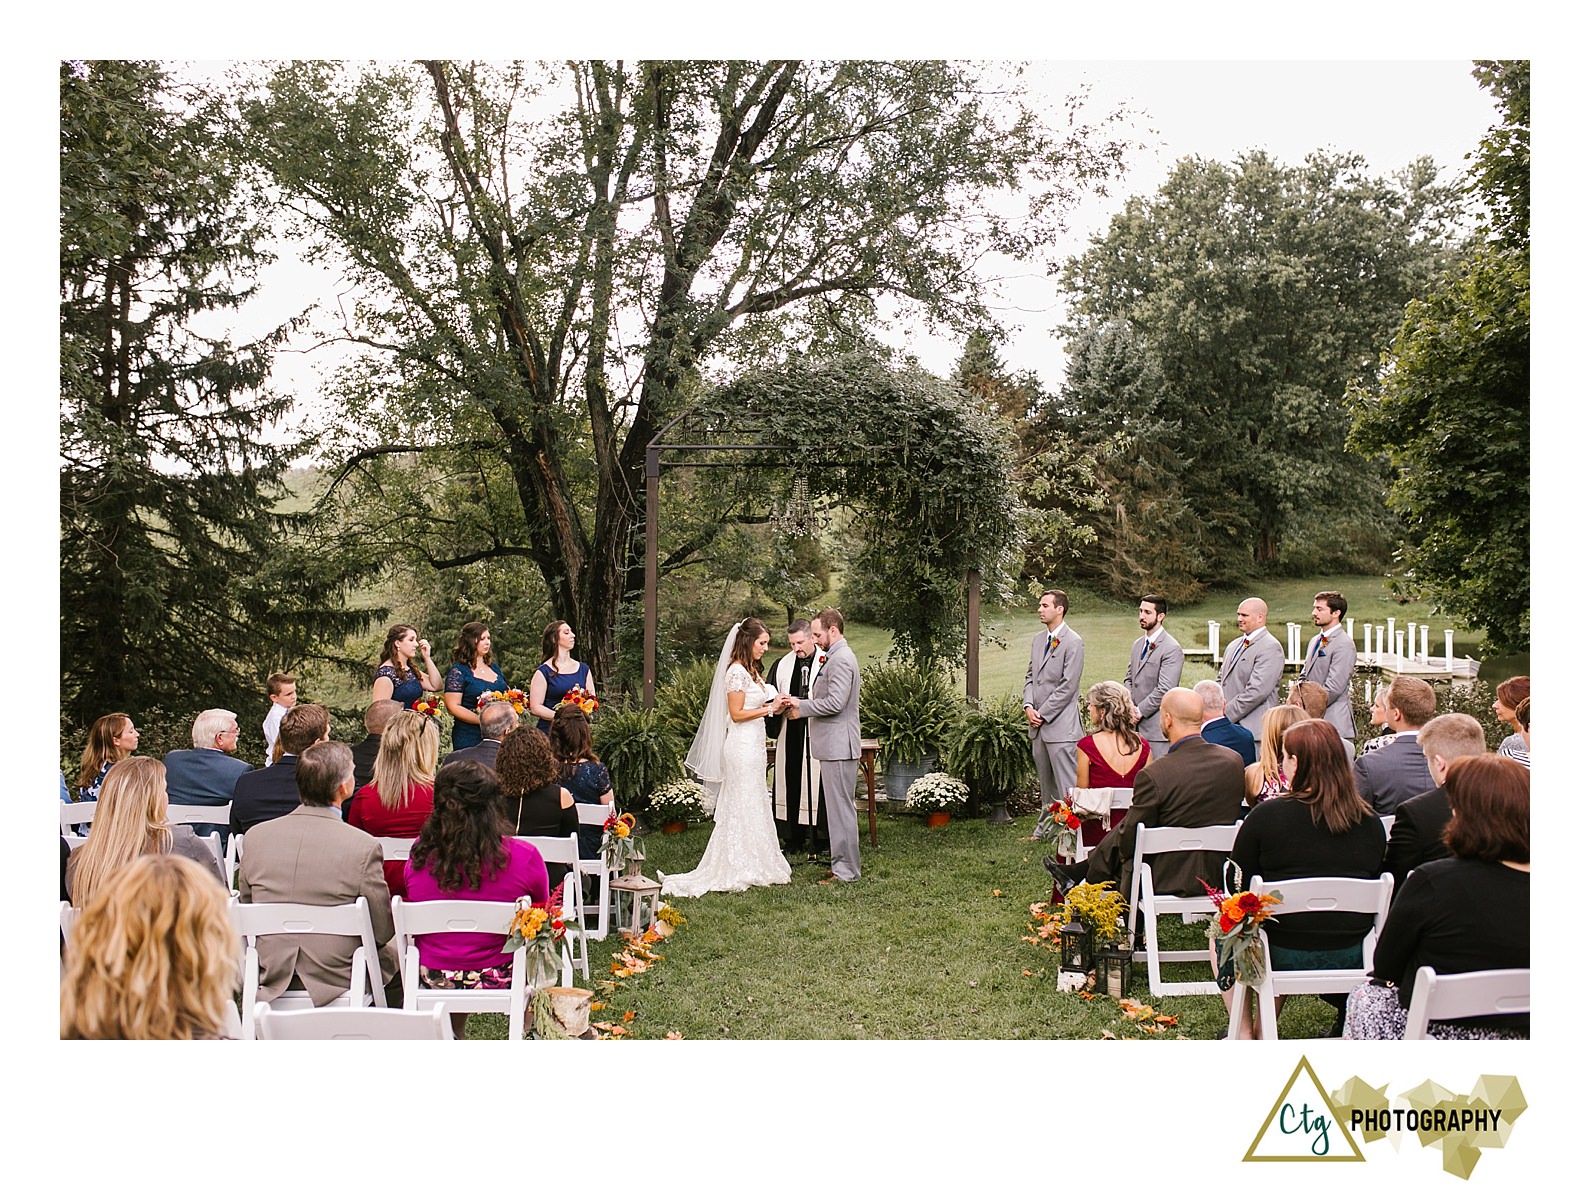 shady-elms-farm-wedding-photos